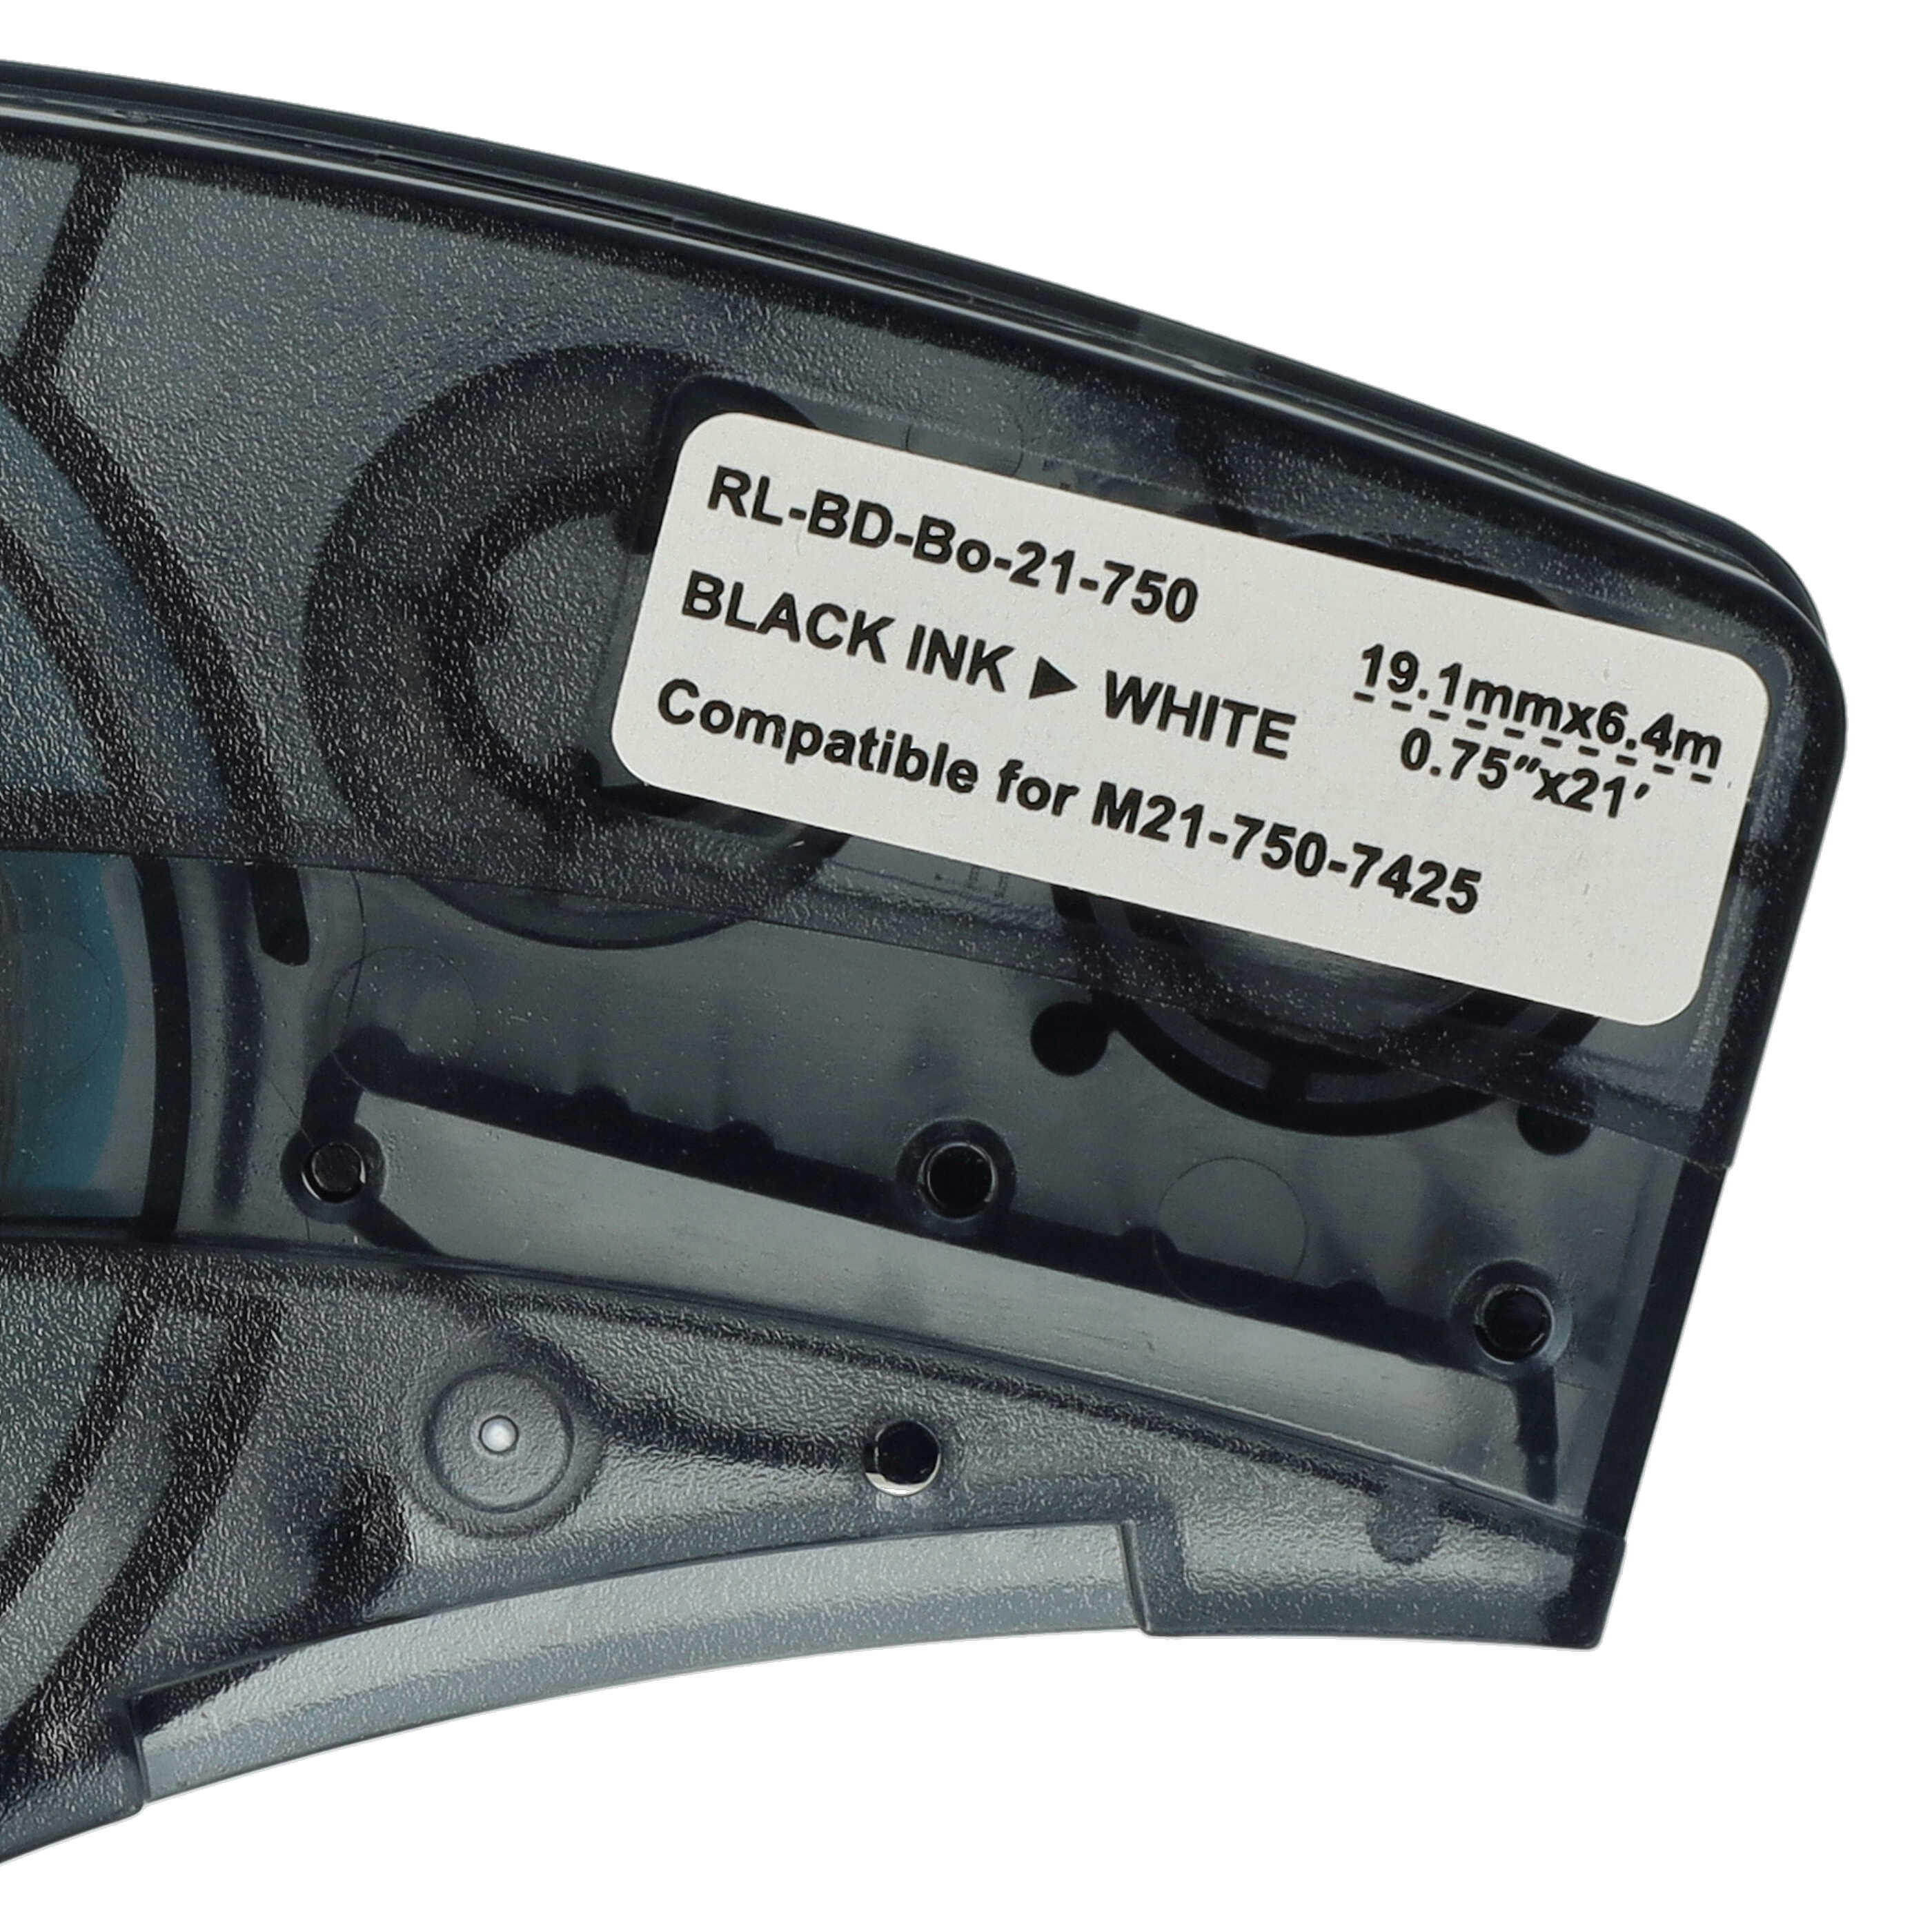 3x Casete cinta escritura reemplaza Brady M21-750-7425 Negro su Blanco